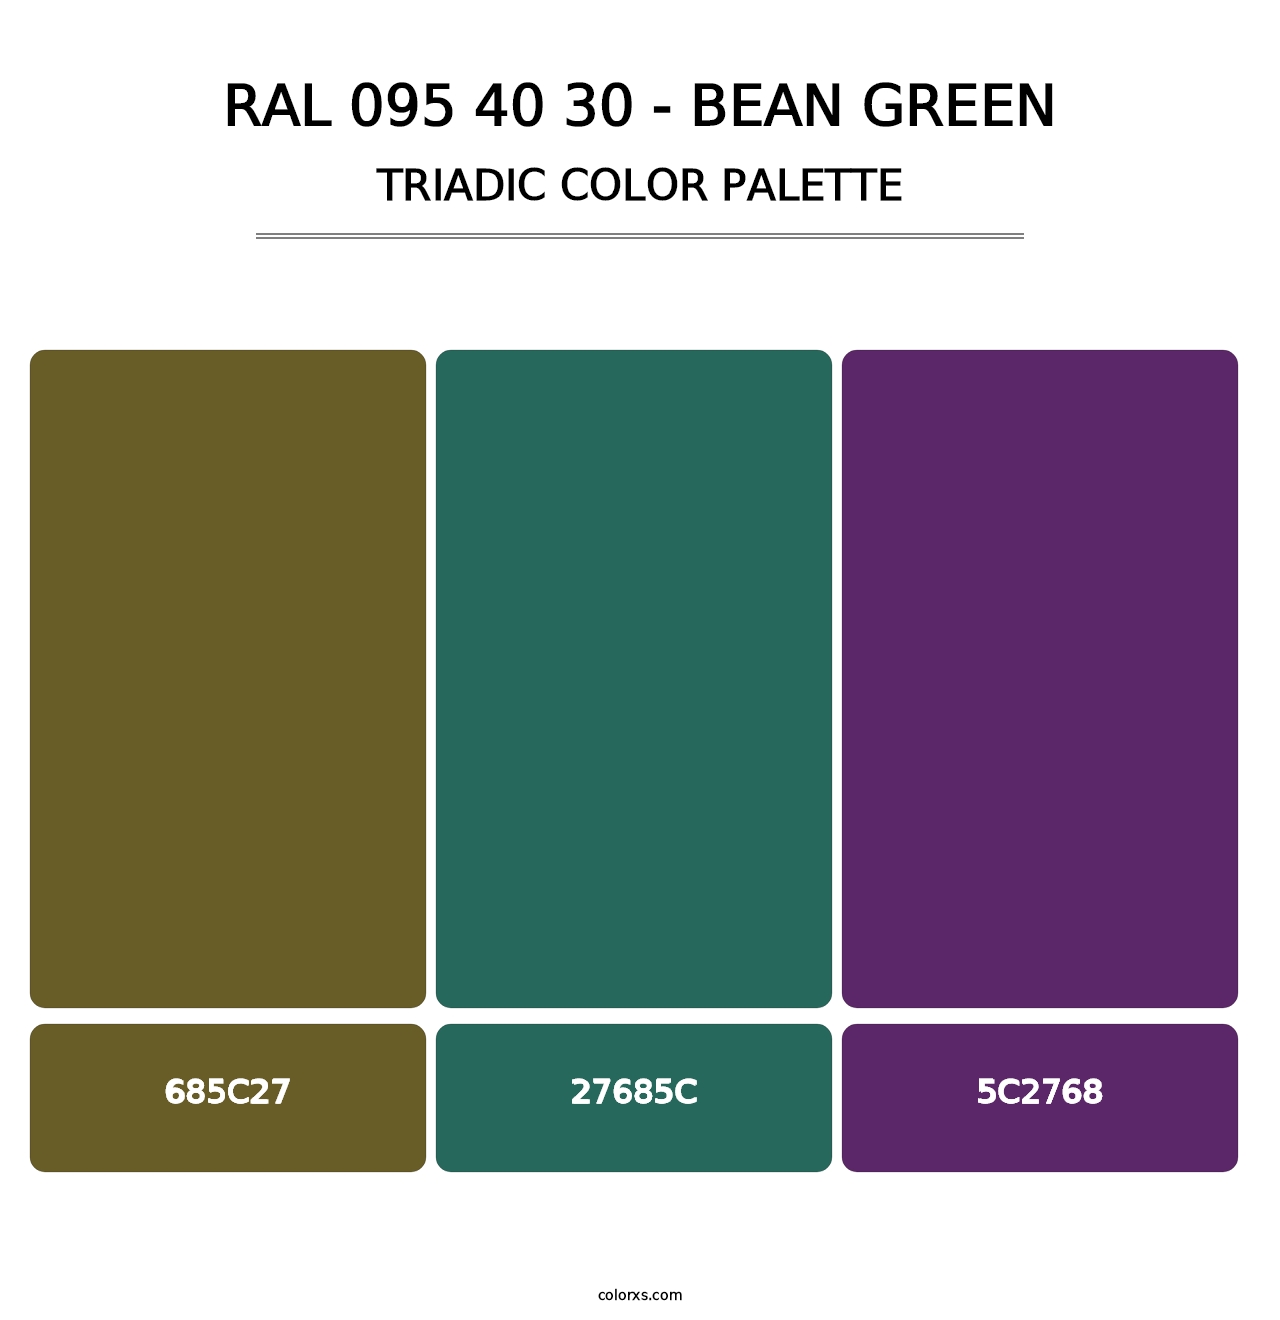 RAL 095 40 30 - Bean Green - Triadic Color Palette